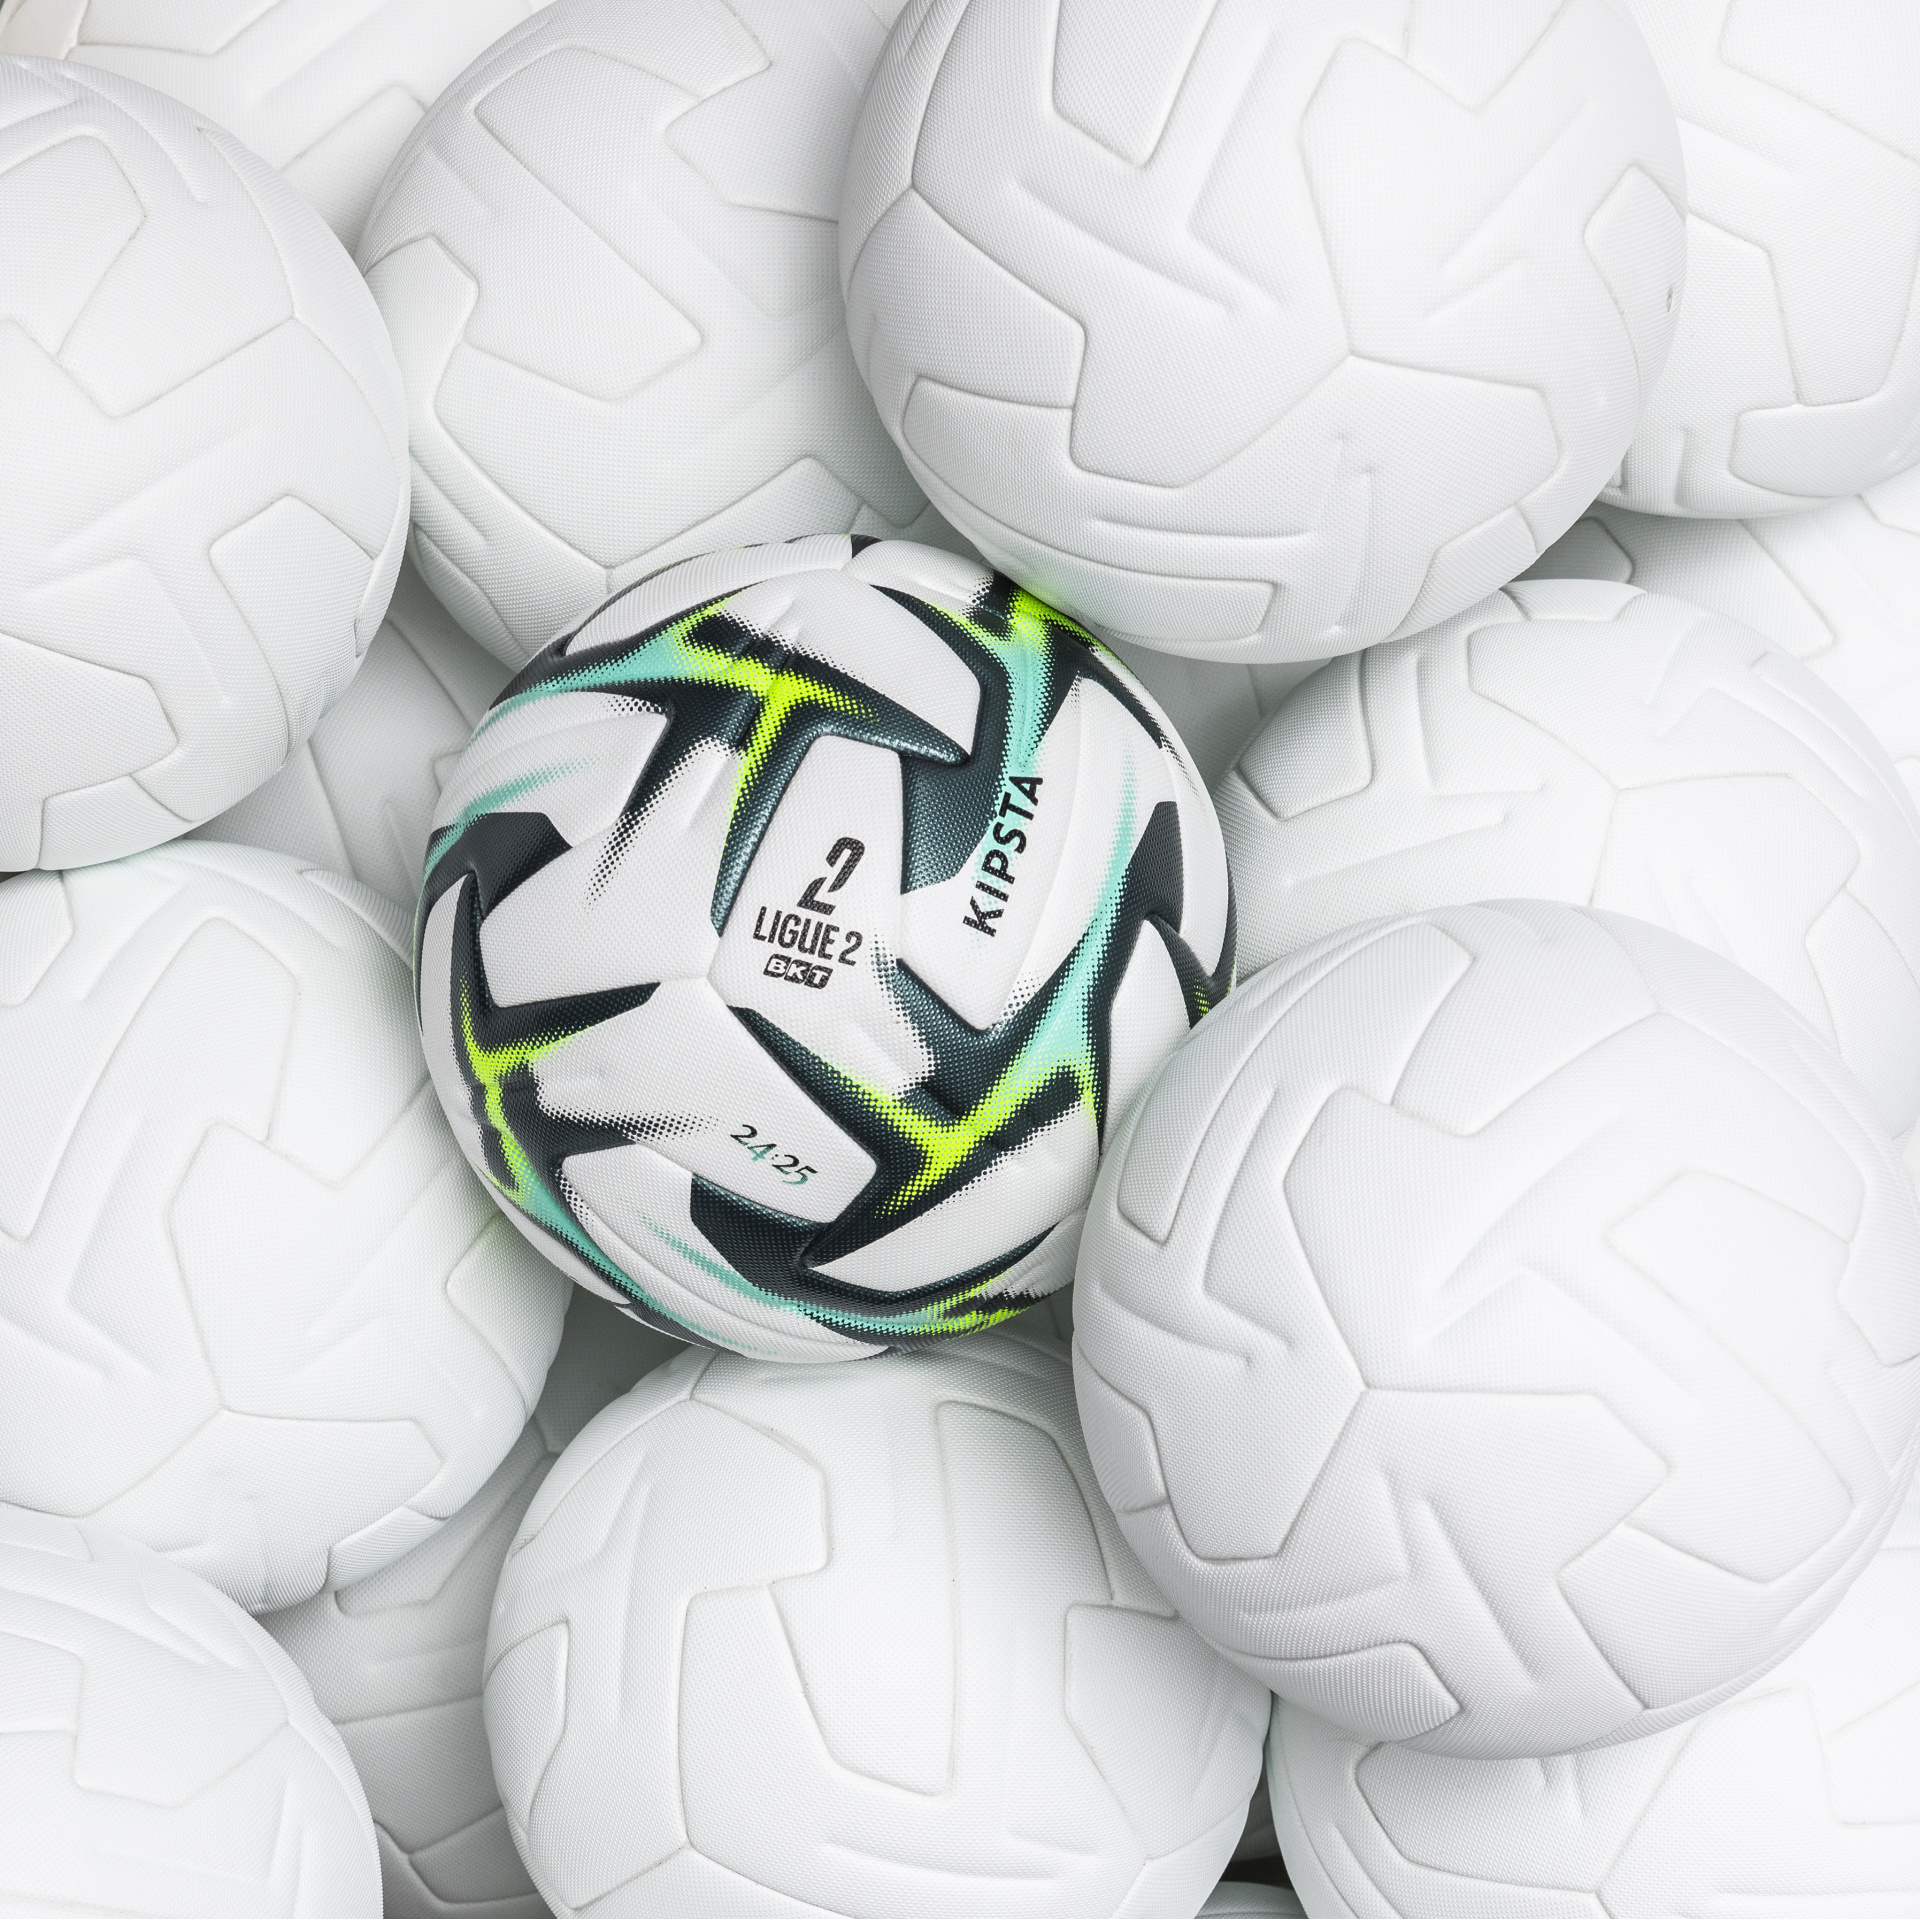 New official Kipsta ball for Ligue 2 BKT